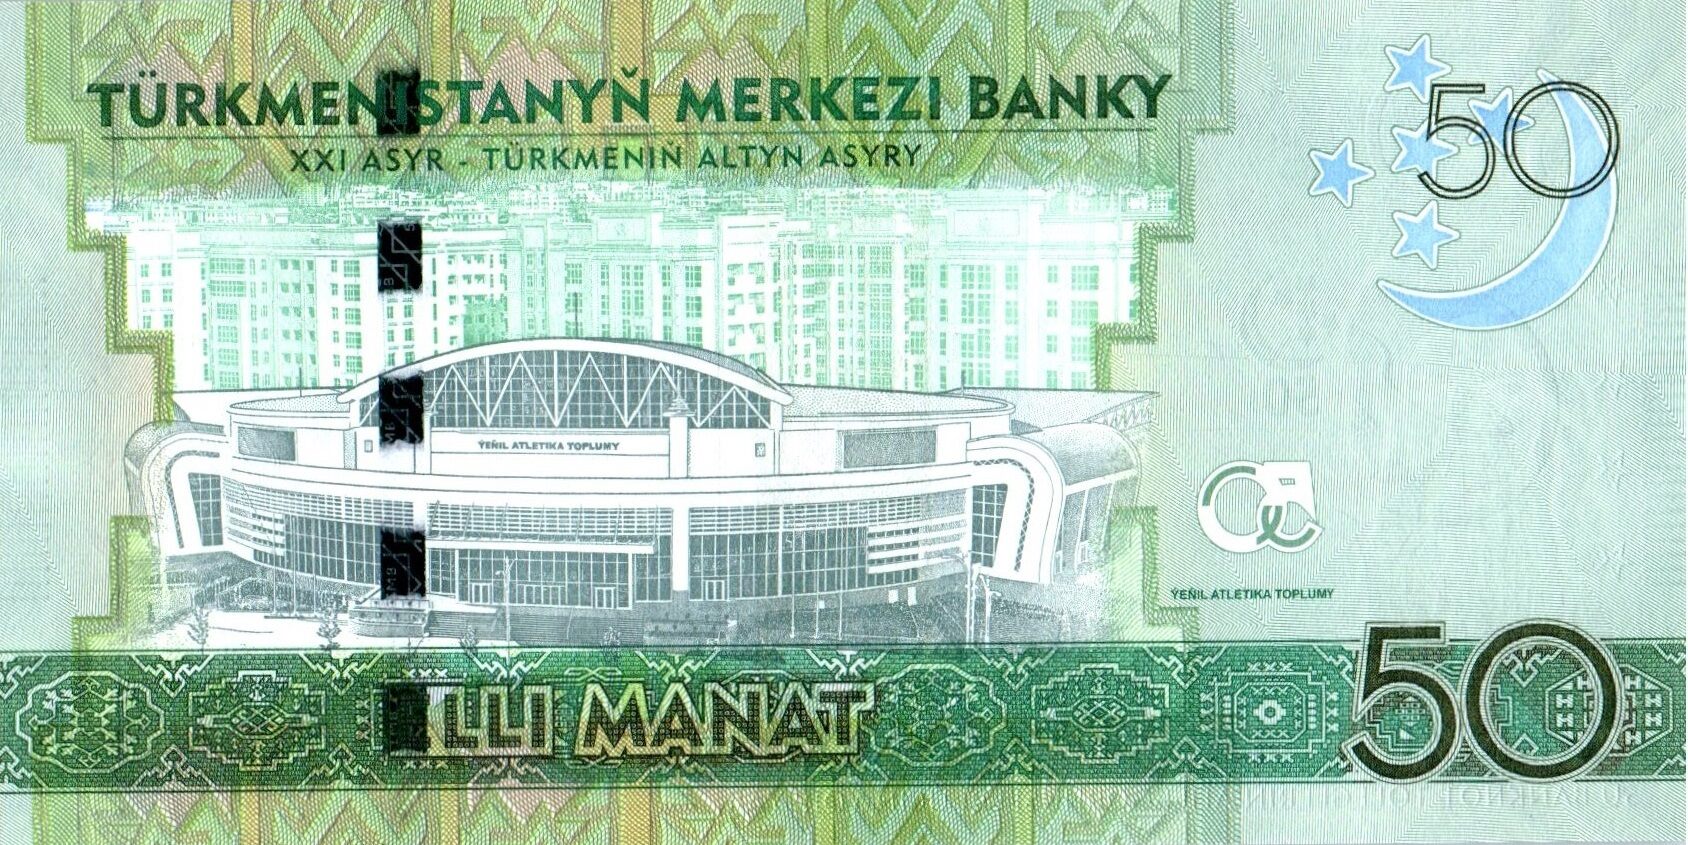 50 Манат. Туркменский манат. 1 манат в долларах